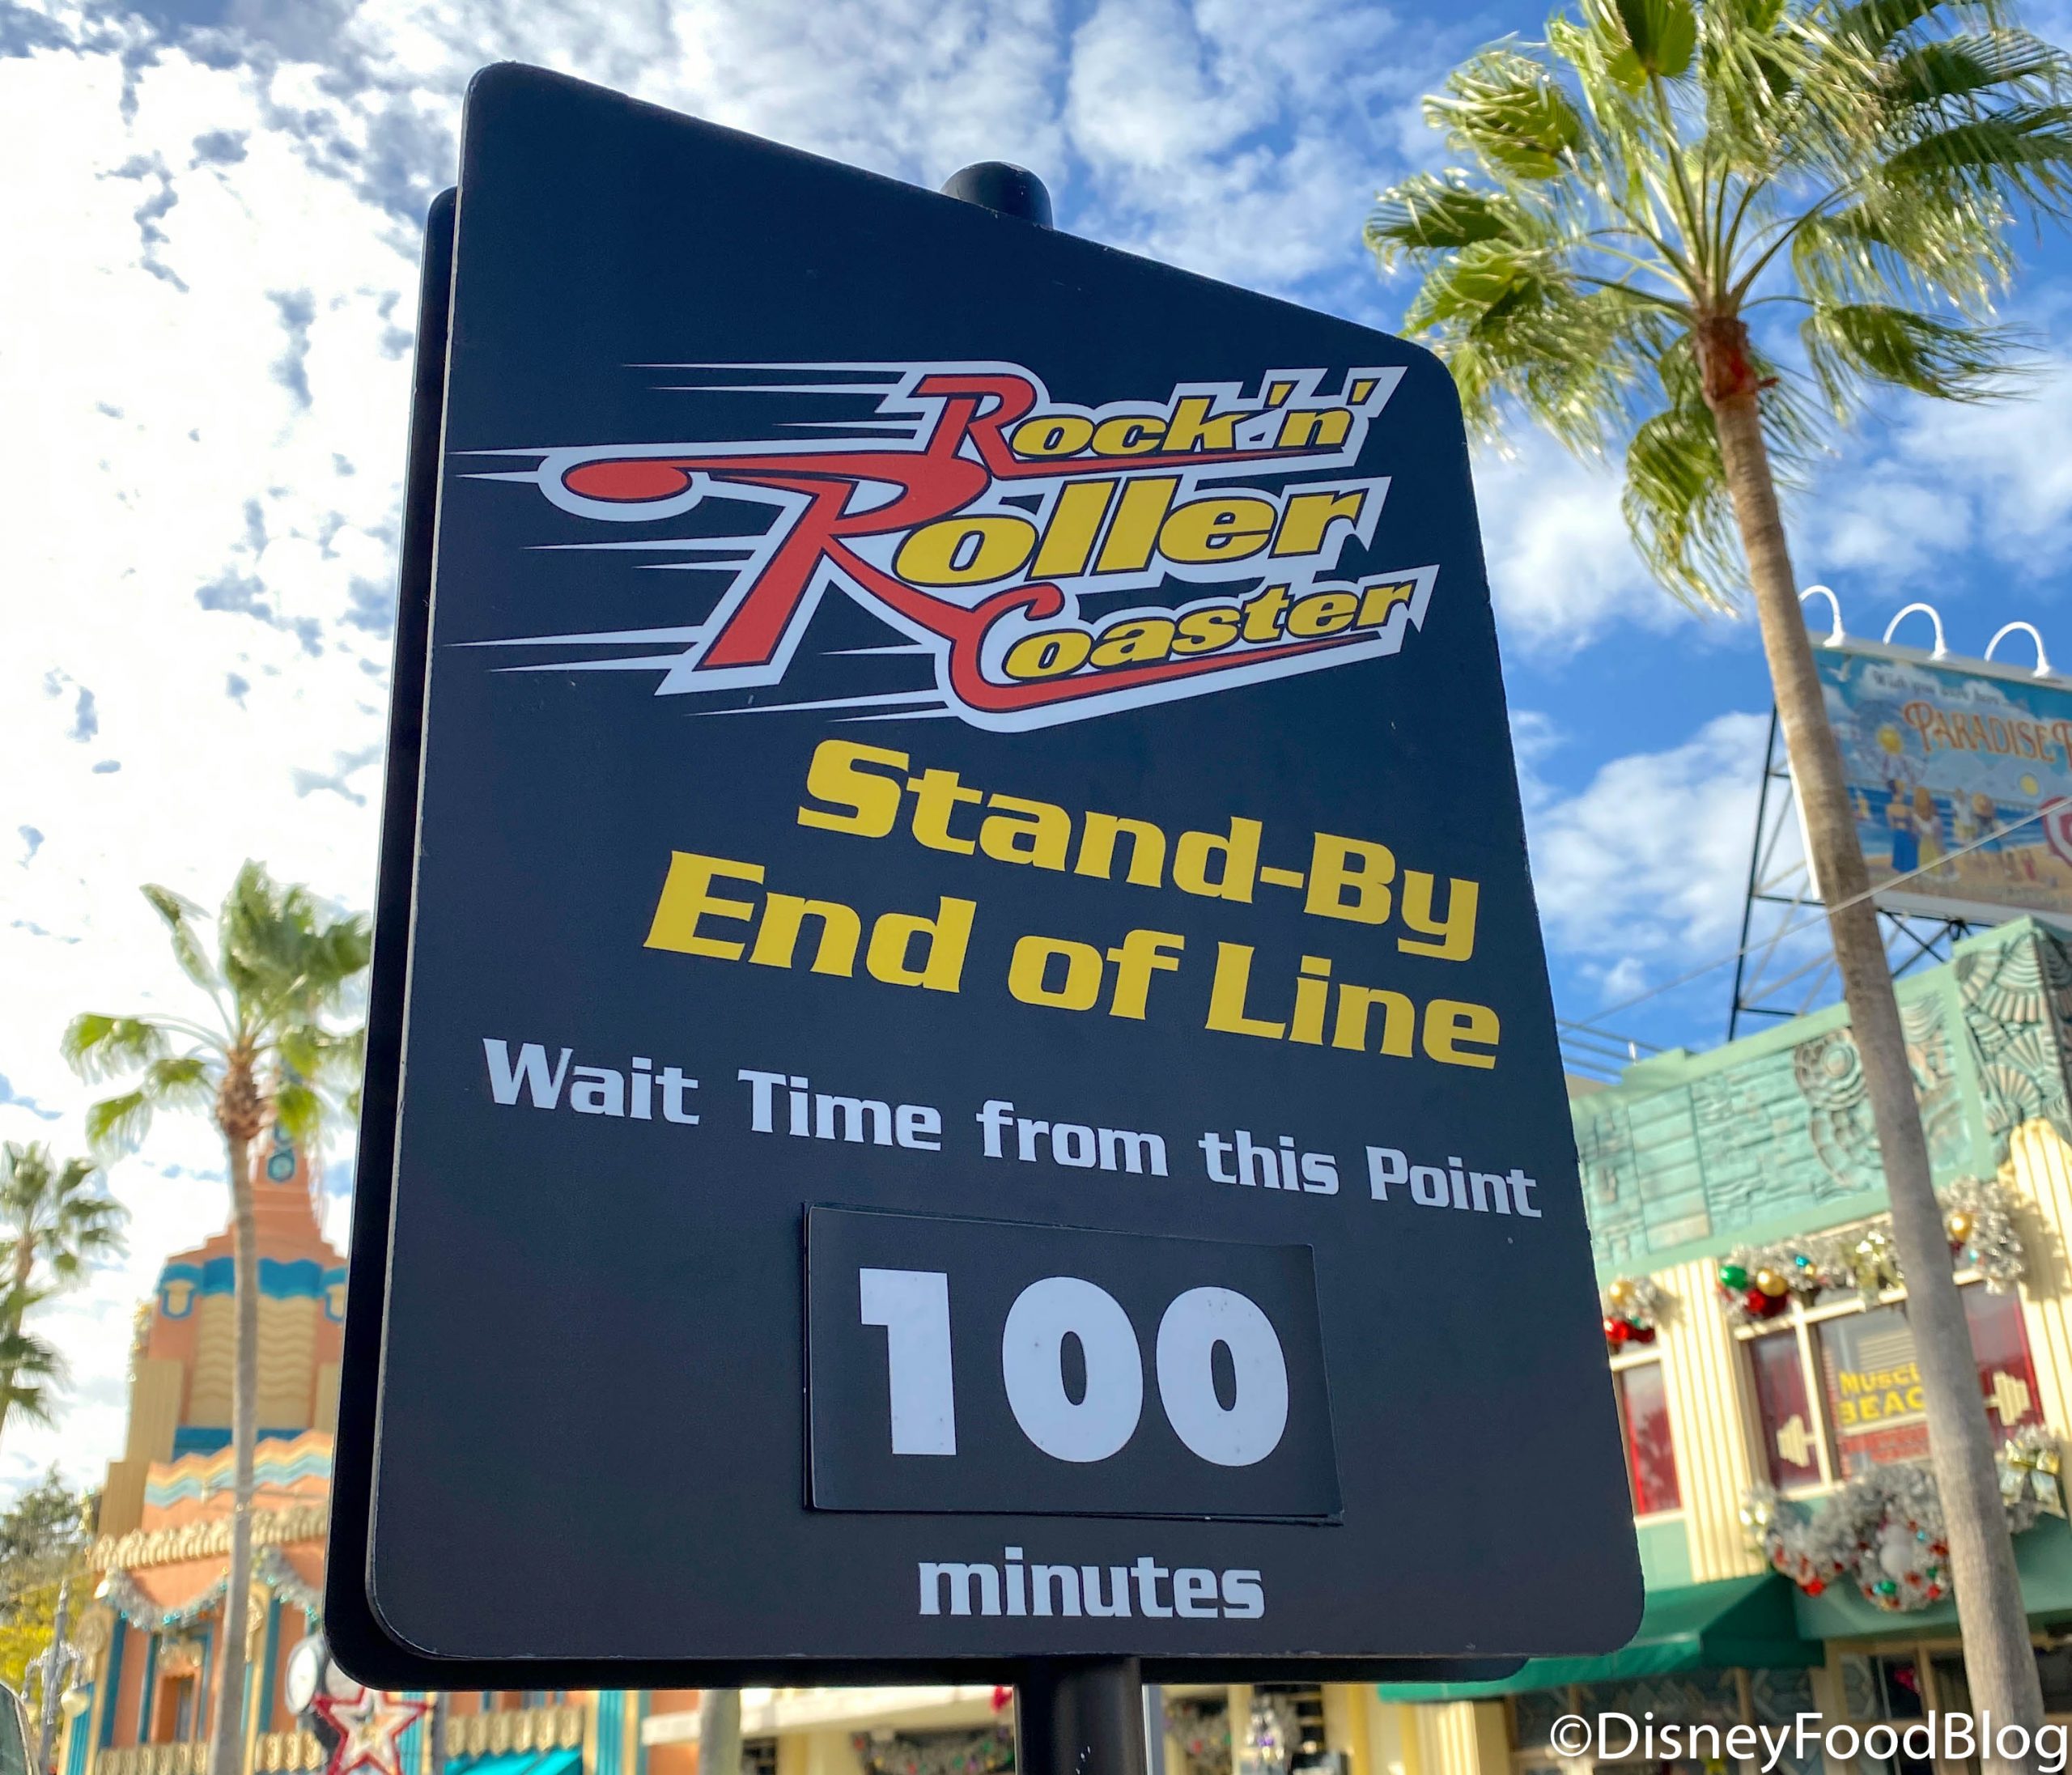 Disney World to temporarily close Rock 'n Roller Coaster